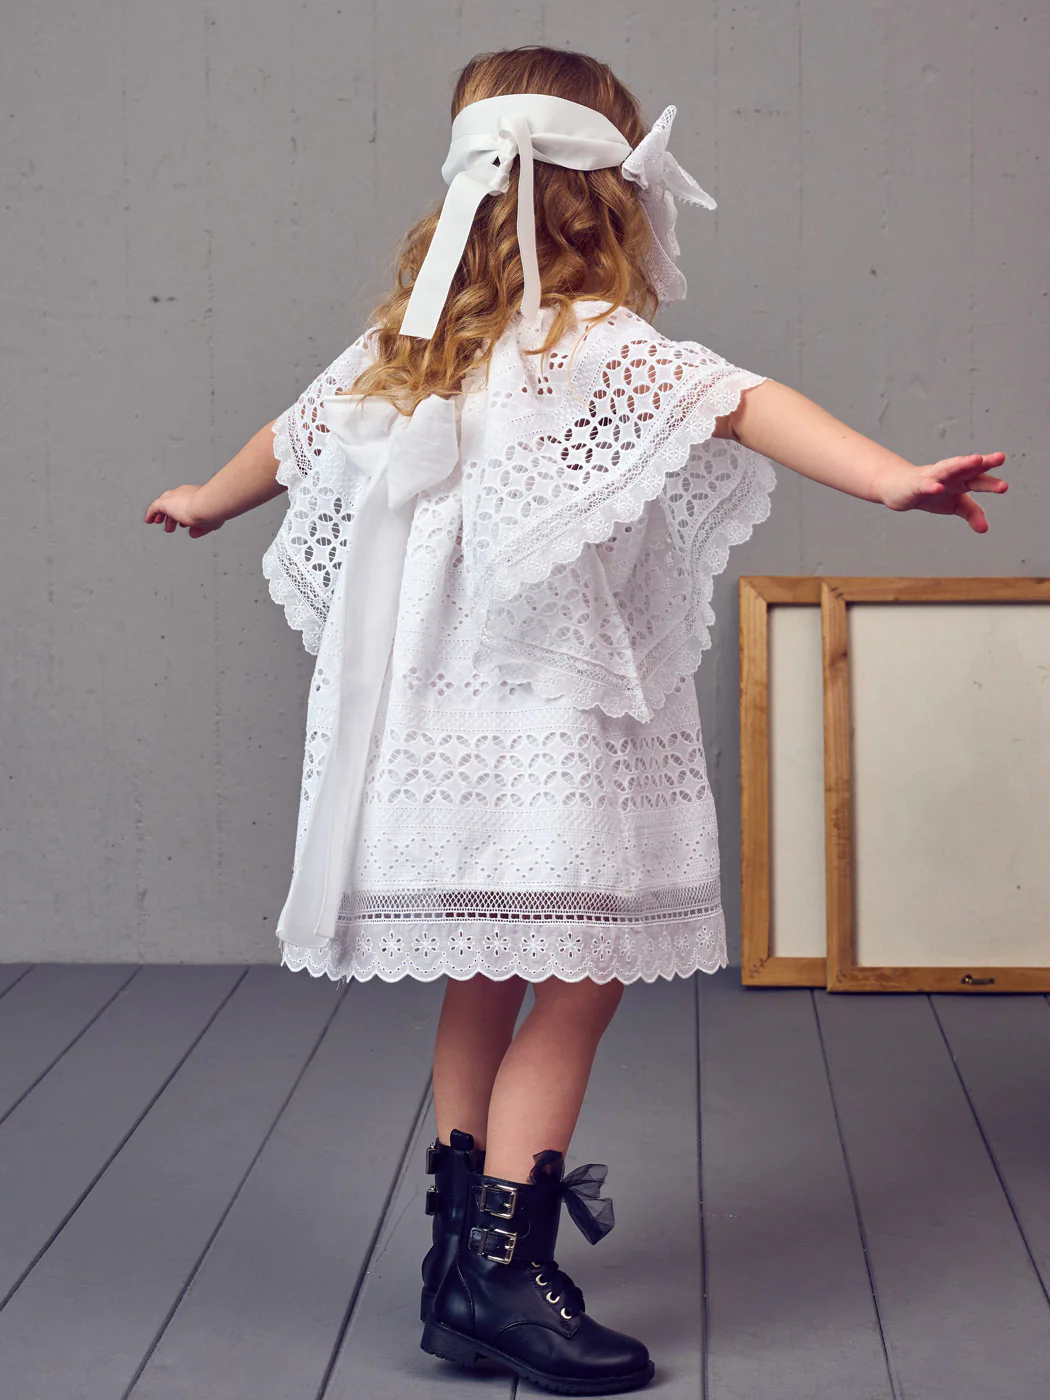 designerscat-kalezia-dress-girl-4_1050x1400